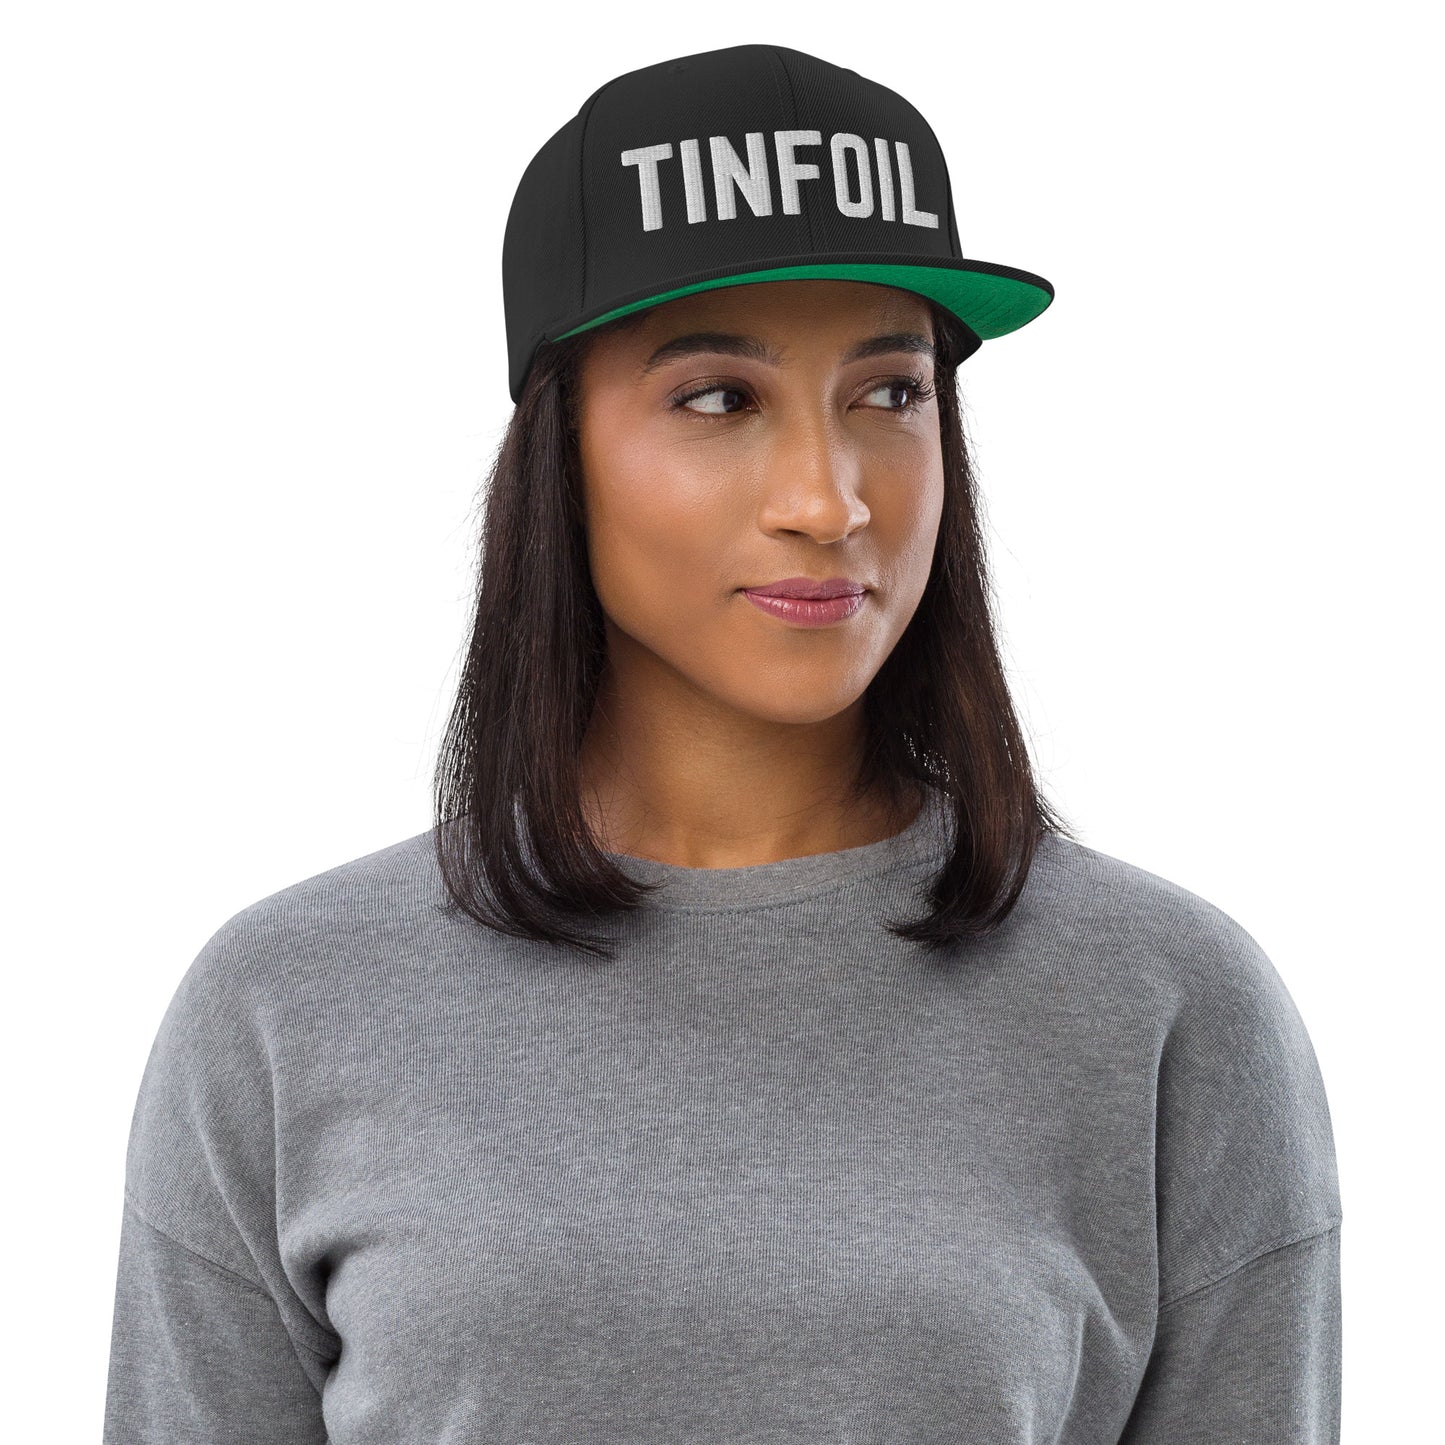 "TINFOIL" Hat